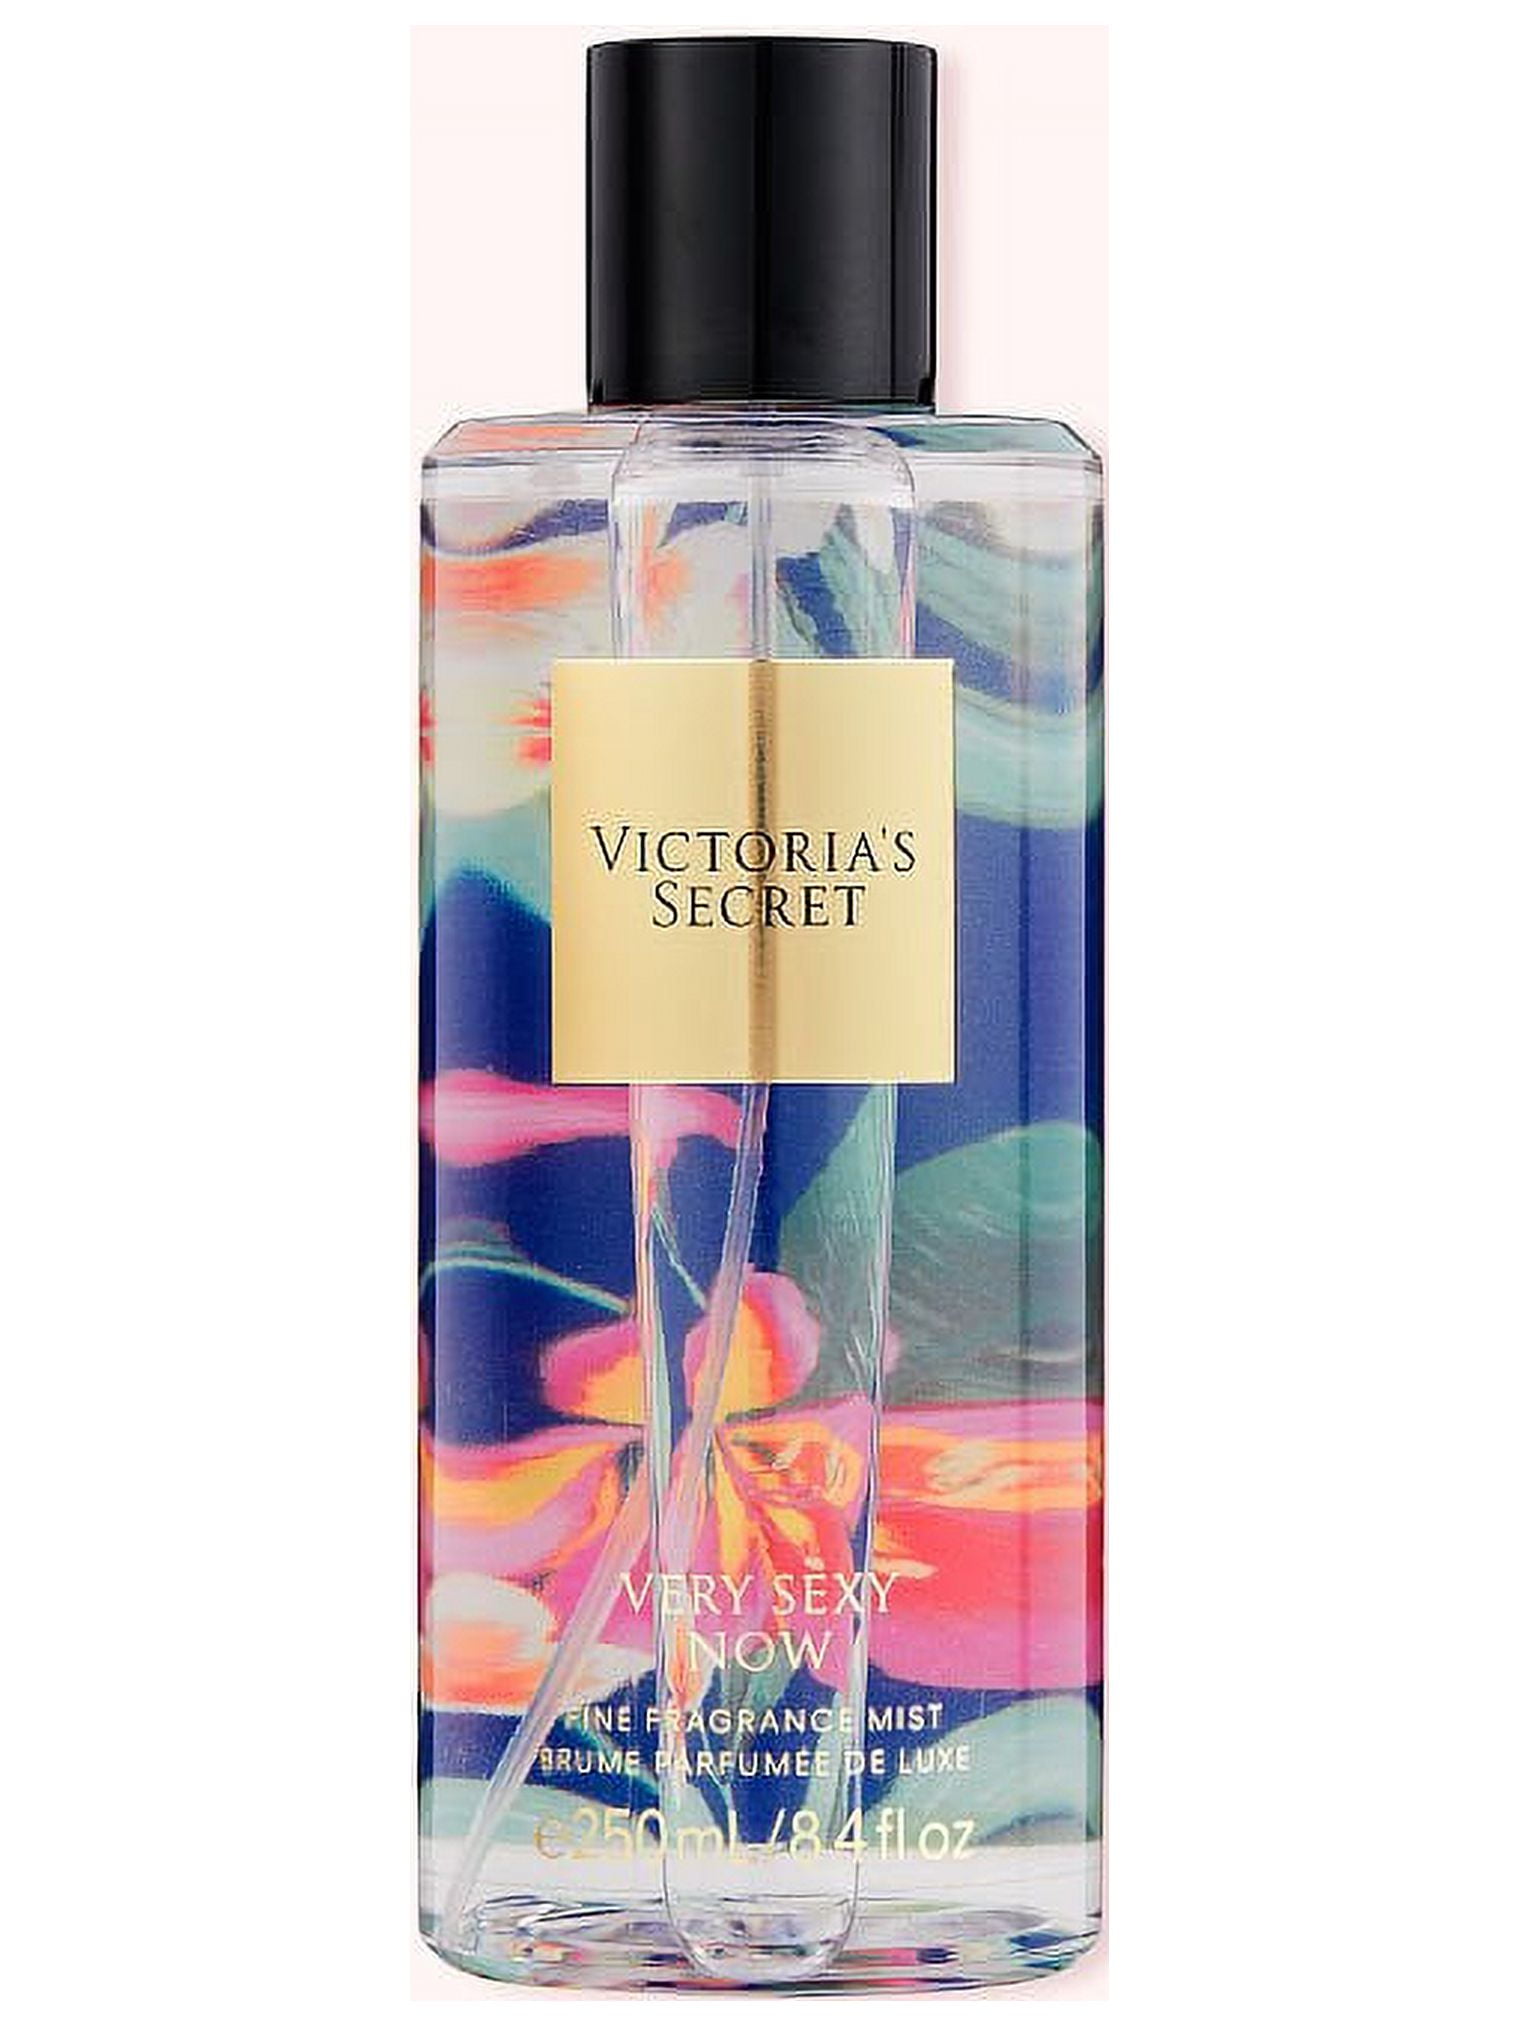 Victoria's Secret Very Sexy Now Fine Fragrance Mist 8.4 fl oz